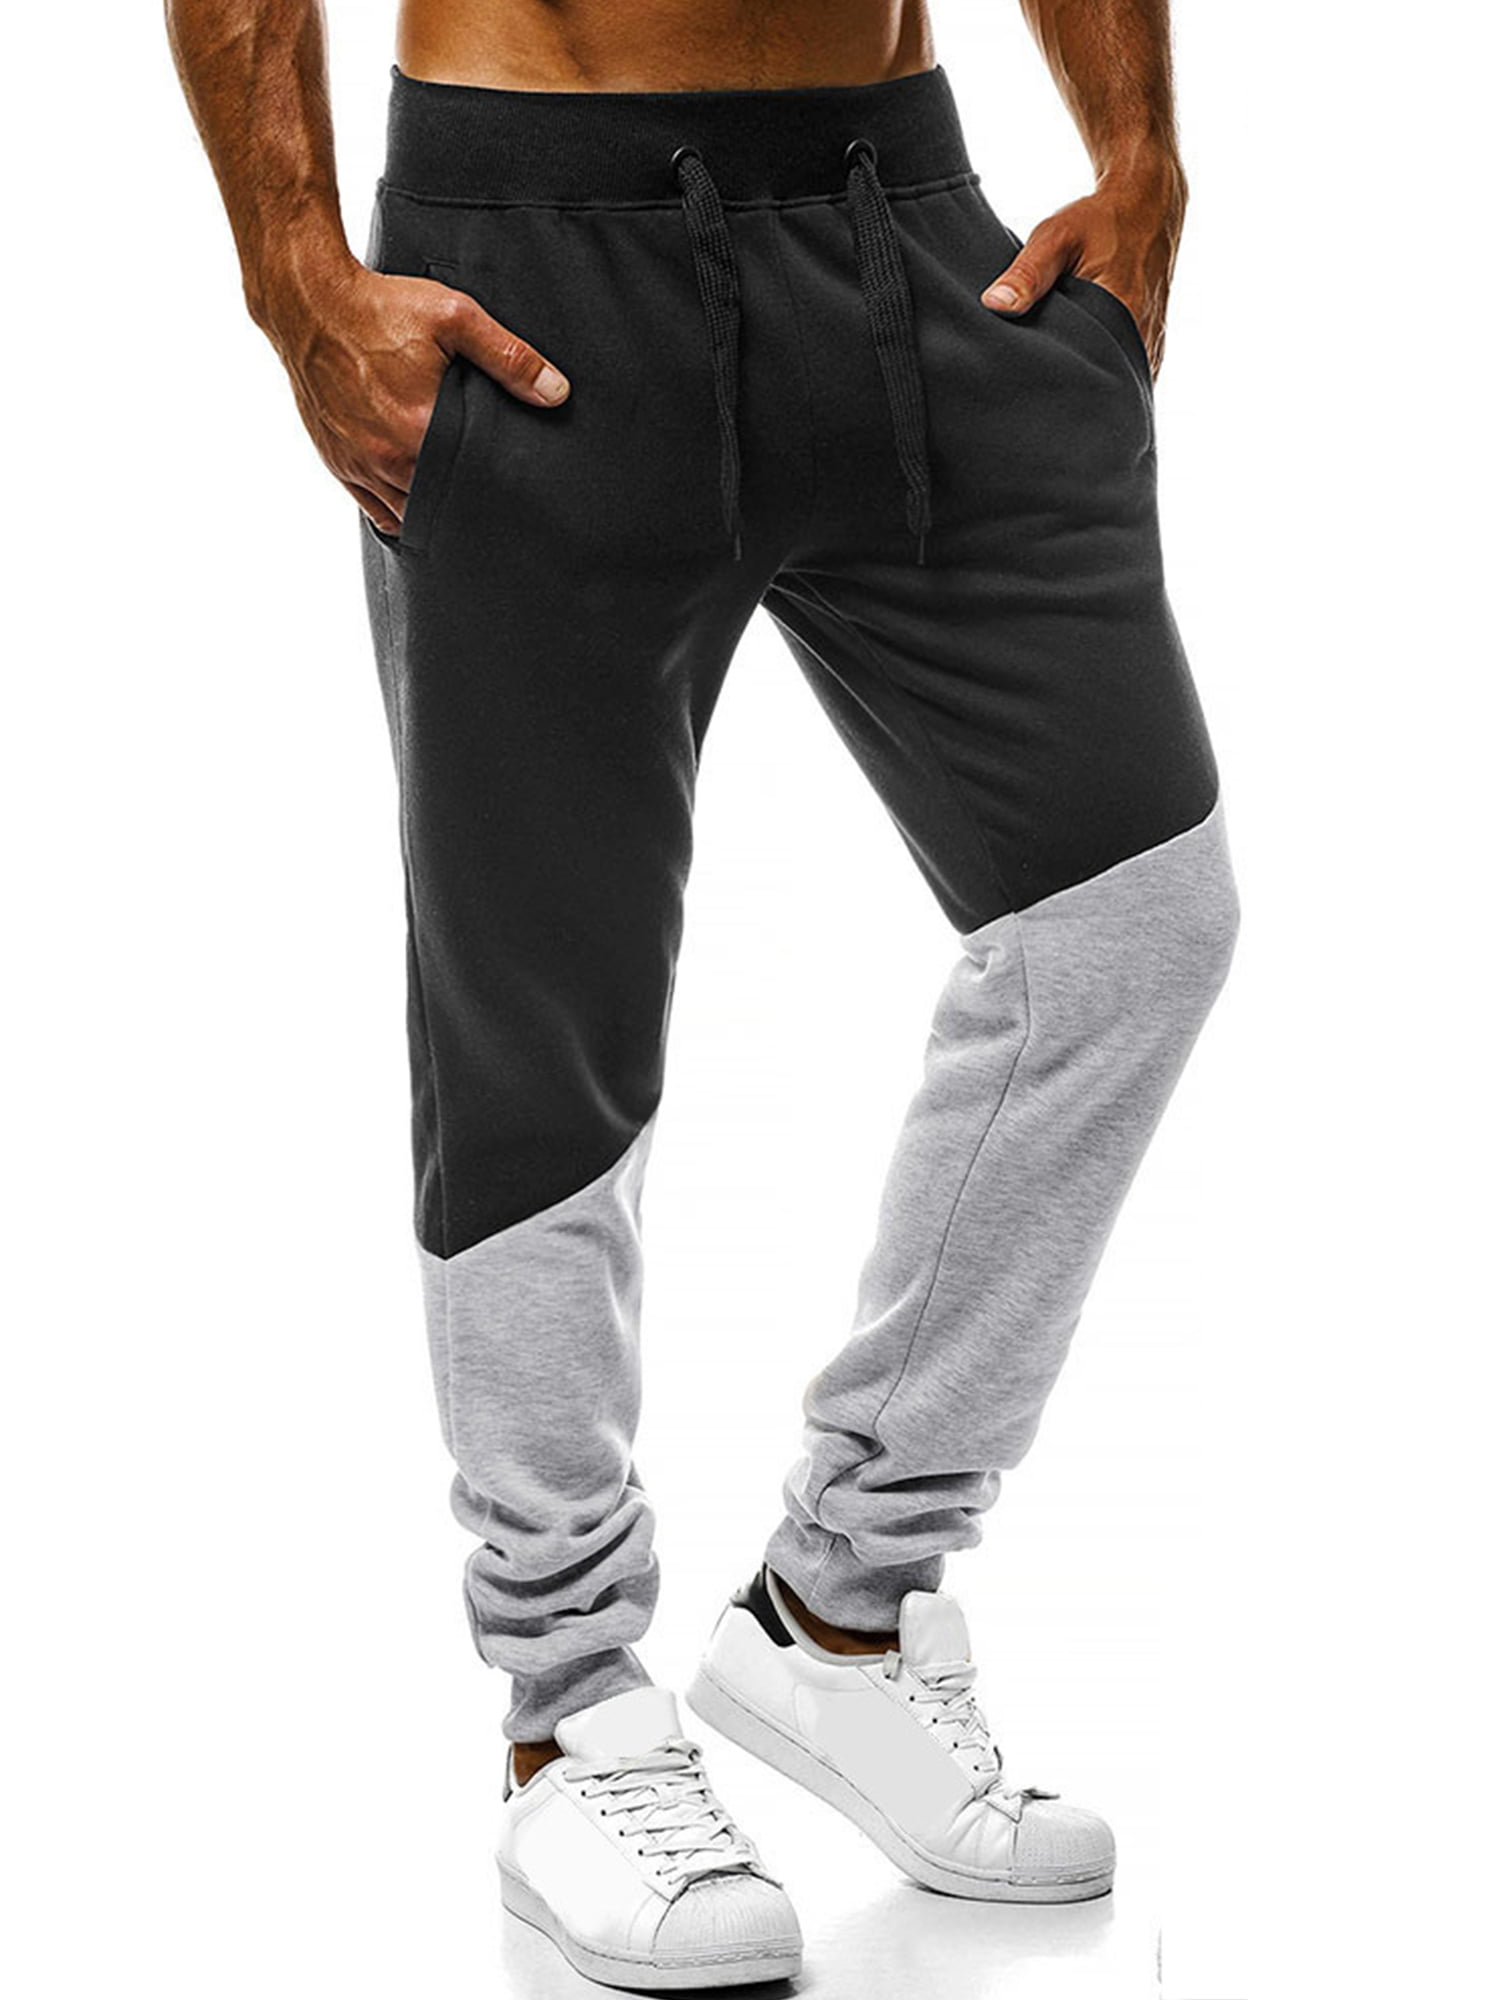 Fashion Men Live Gym Fit Causal Sports Pants Trousers Jogging Joggers Sweatpants